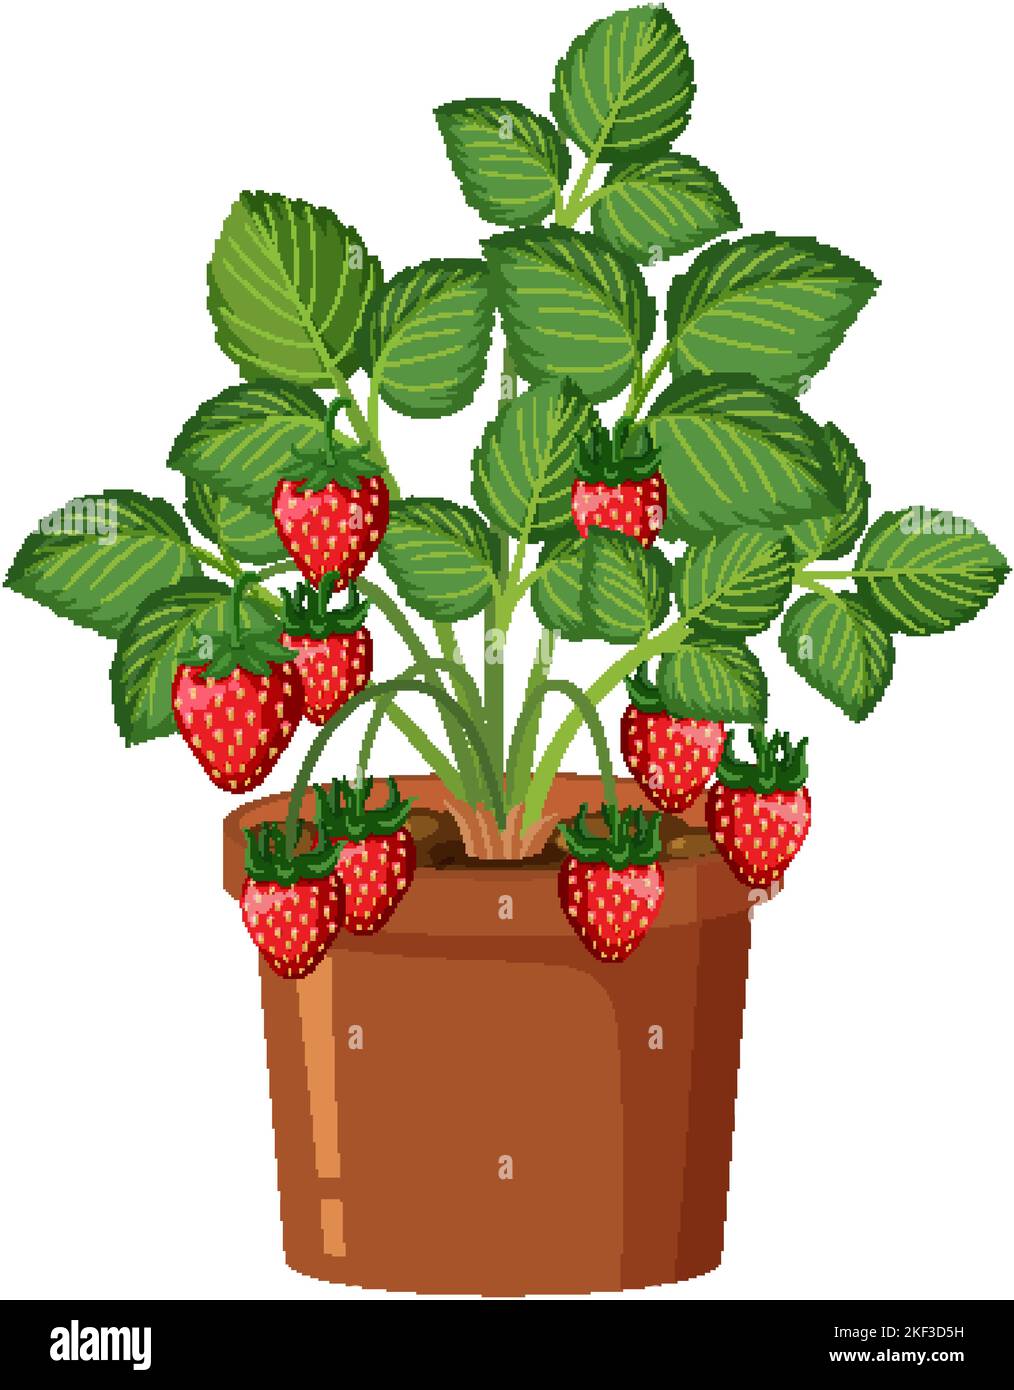 Free Strawberry plant Icons, Symbols & Images | BioRender